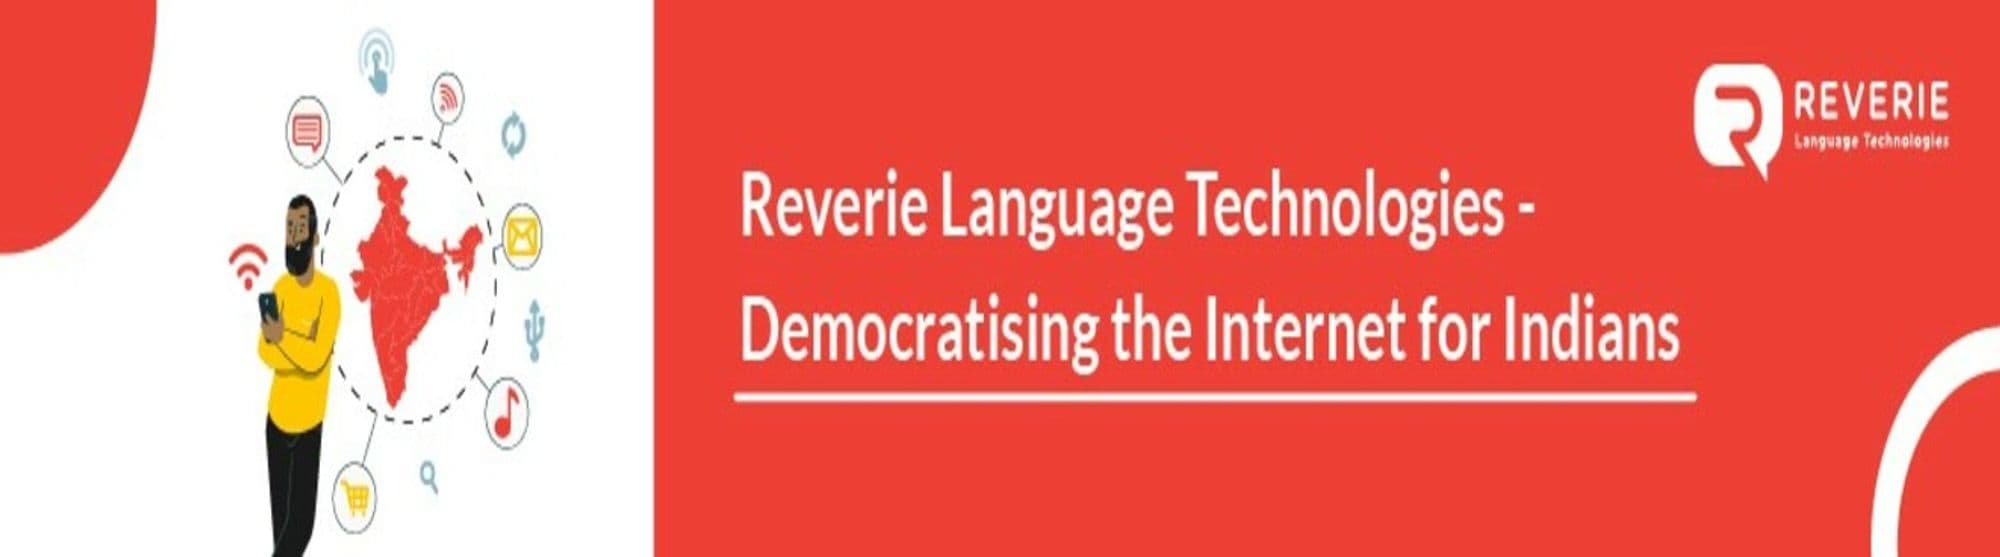 Reverie Language Technologies Cover Image